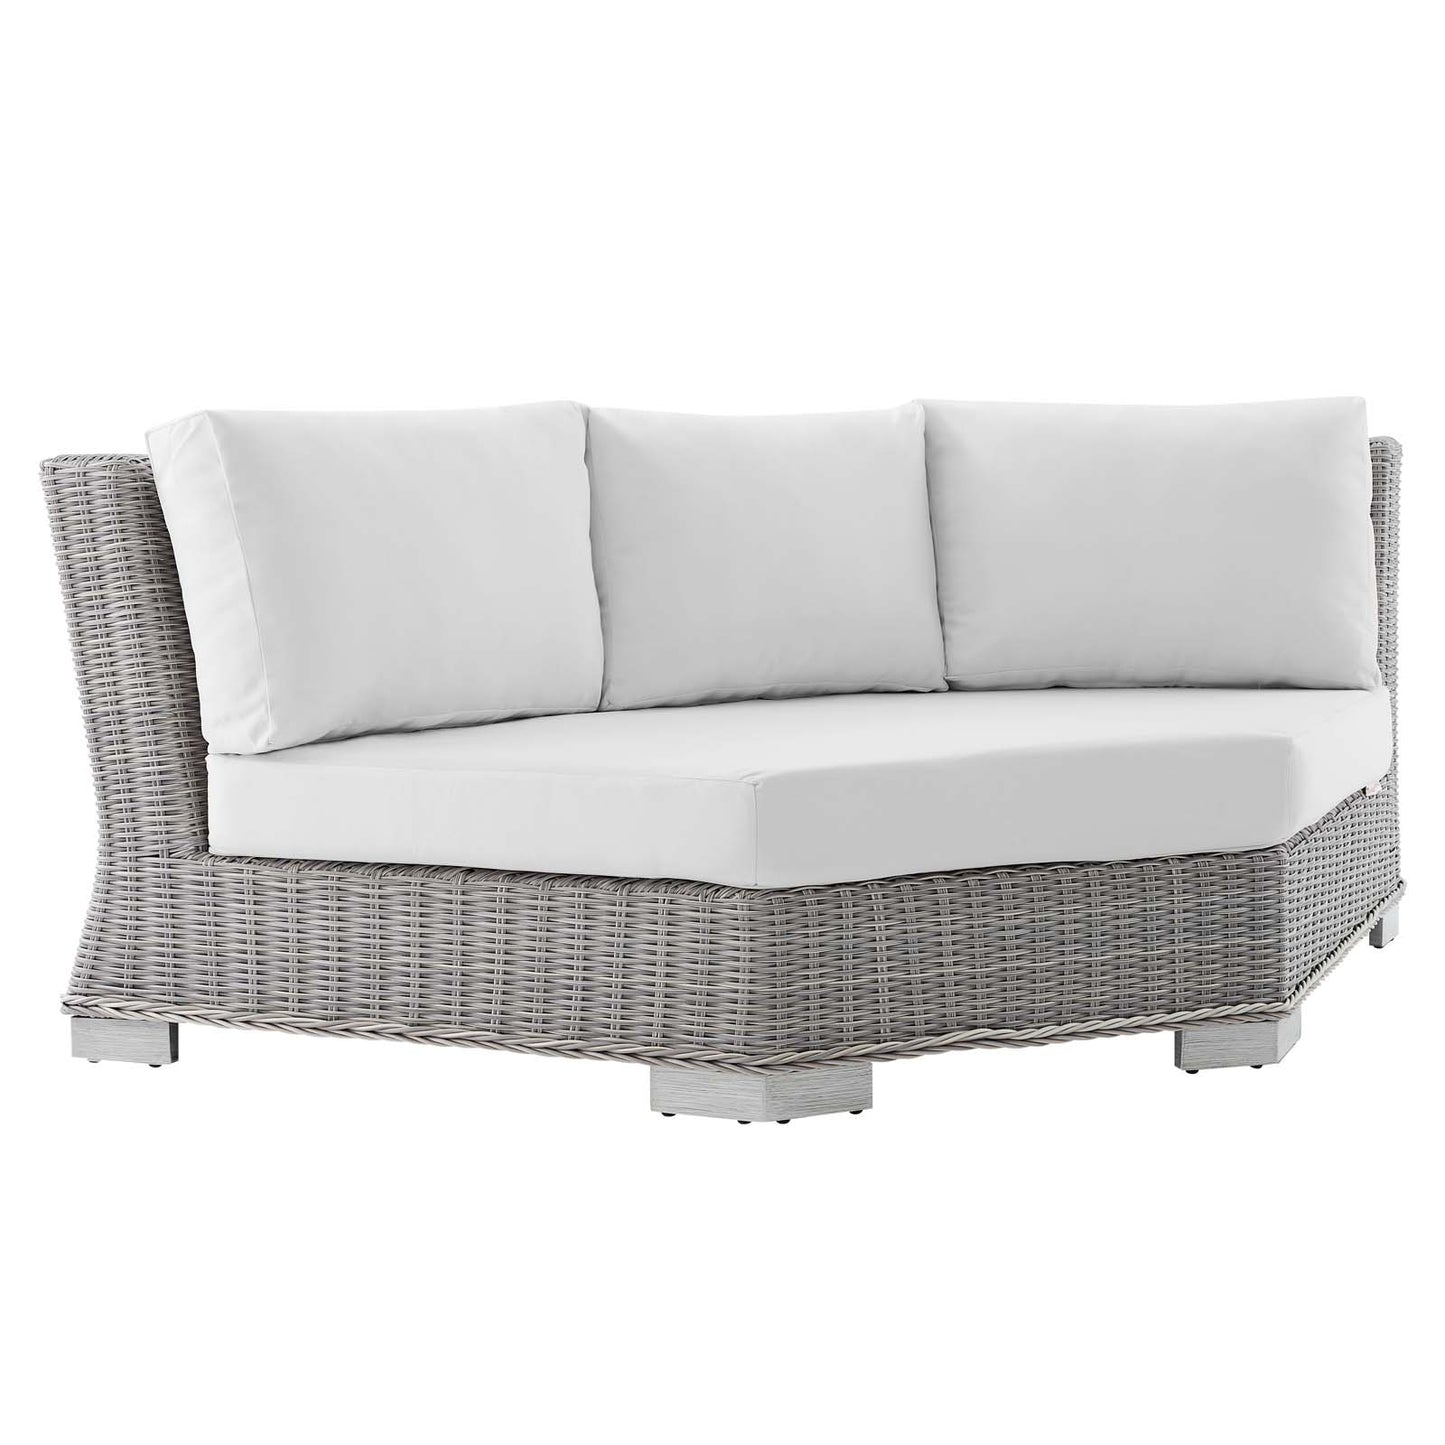 Conway Sunbrella® Outdoor Patio Wicker Rattan 6-Piece Sectional Sofa Set Light Gray White EEI-4358-LGR-WHI